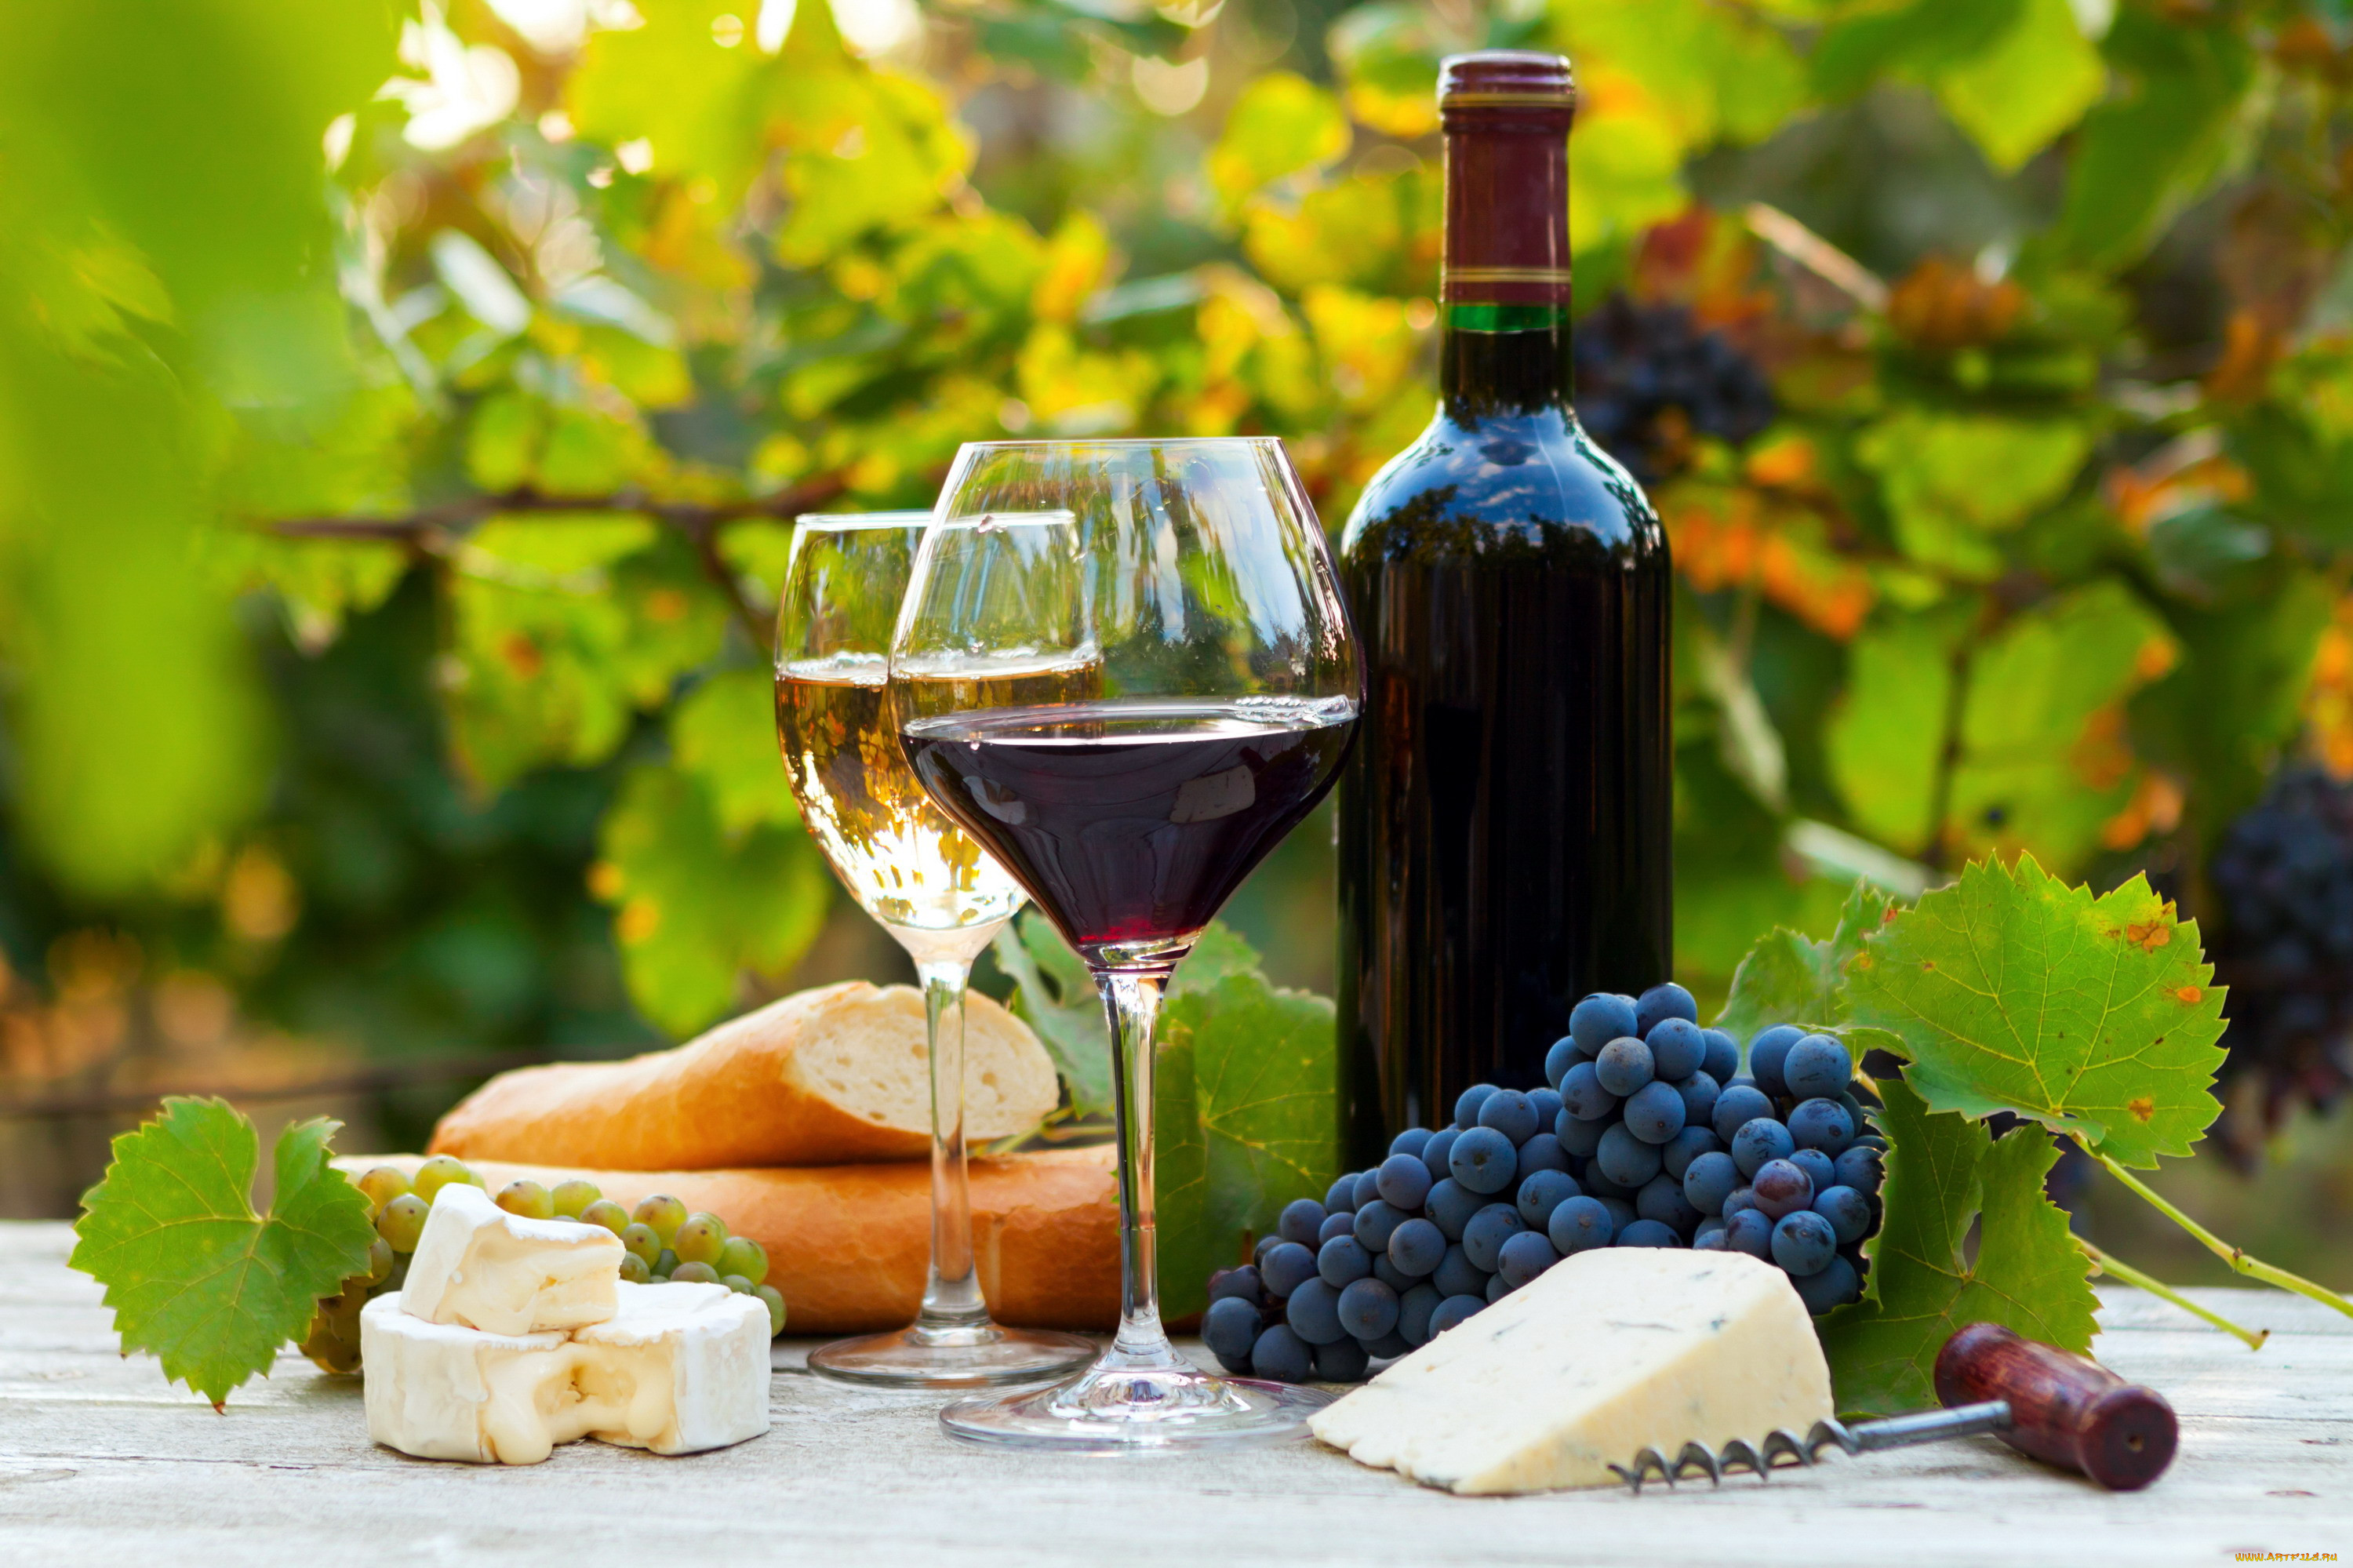 Виноград вино 7 букв. Шато Пино виноградники. Шато Пино винодельня. Вино и сыр. Виноградники вино.